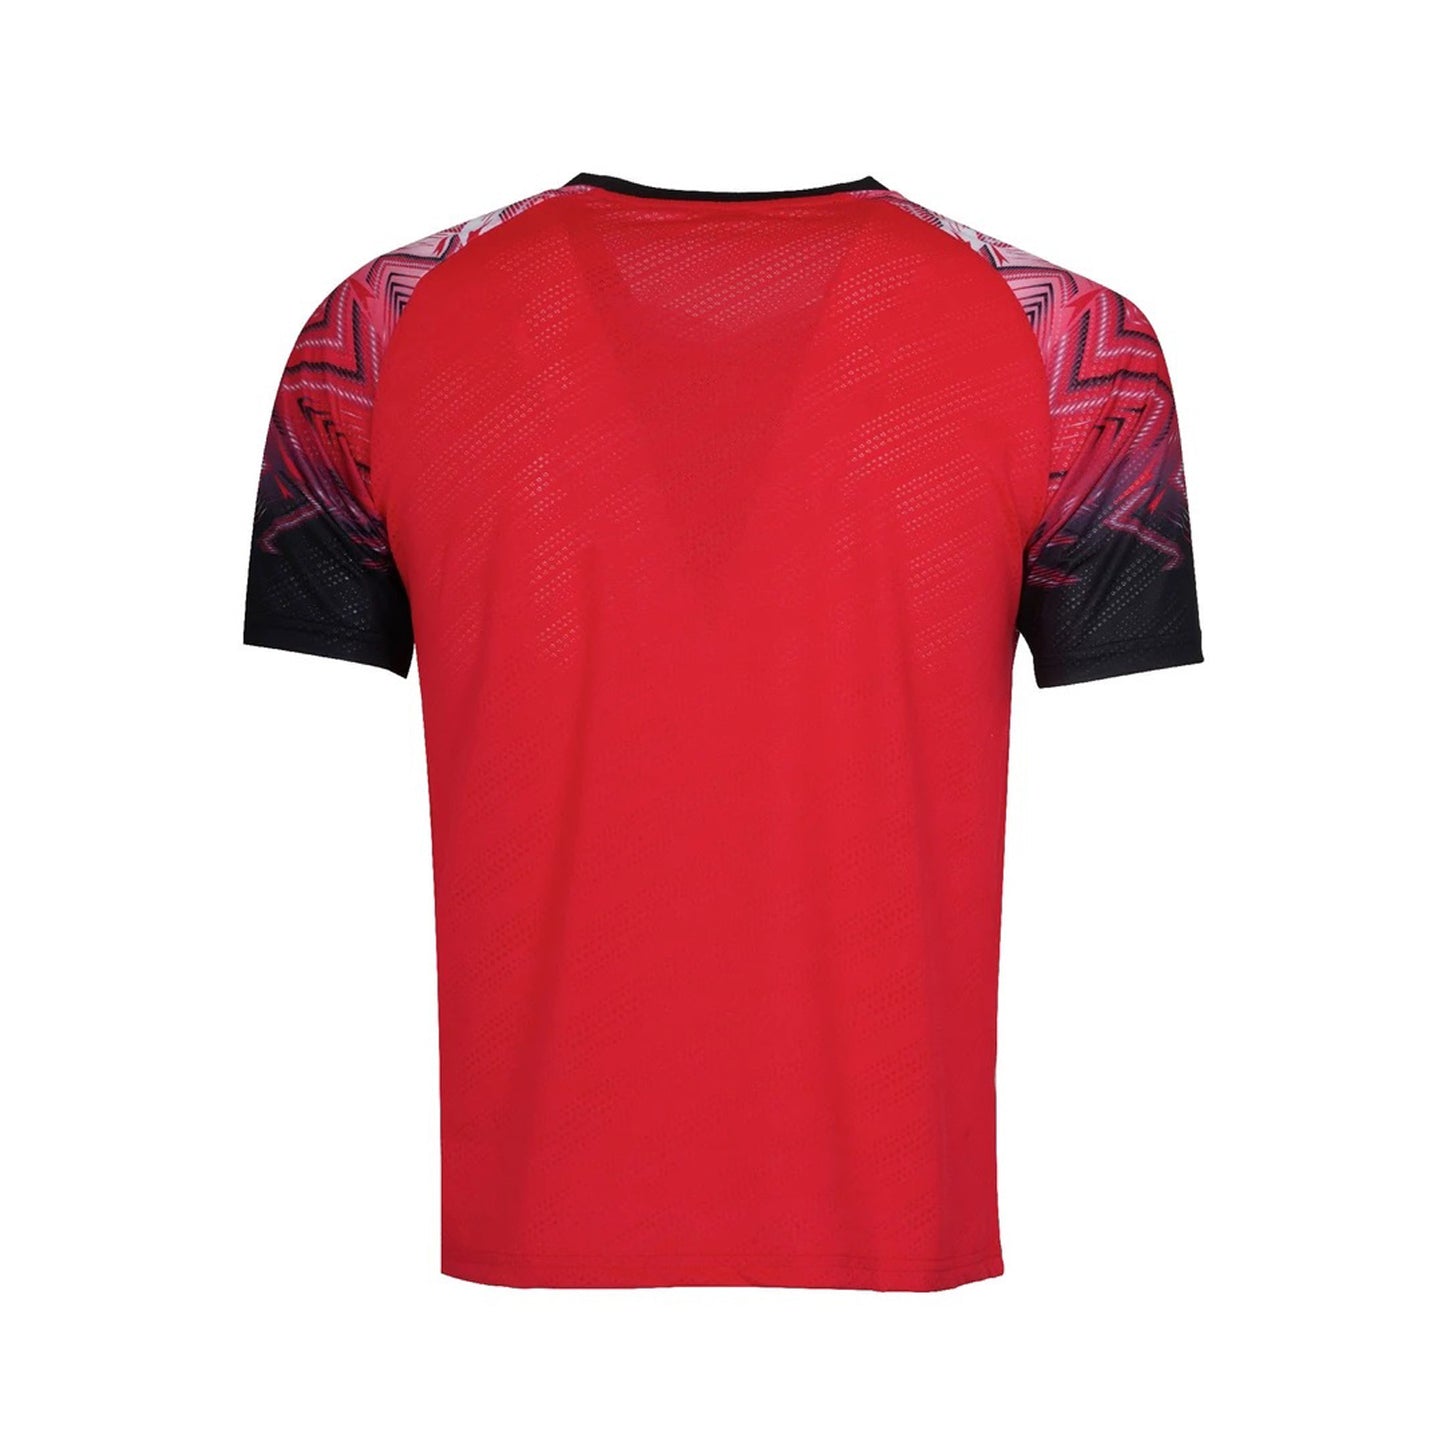 Li-Ning ATSS995 Round Neck Badminton Tshirt, Red – Prokicksports